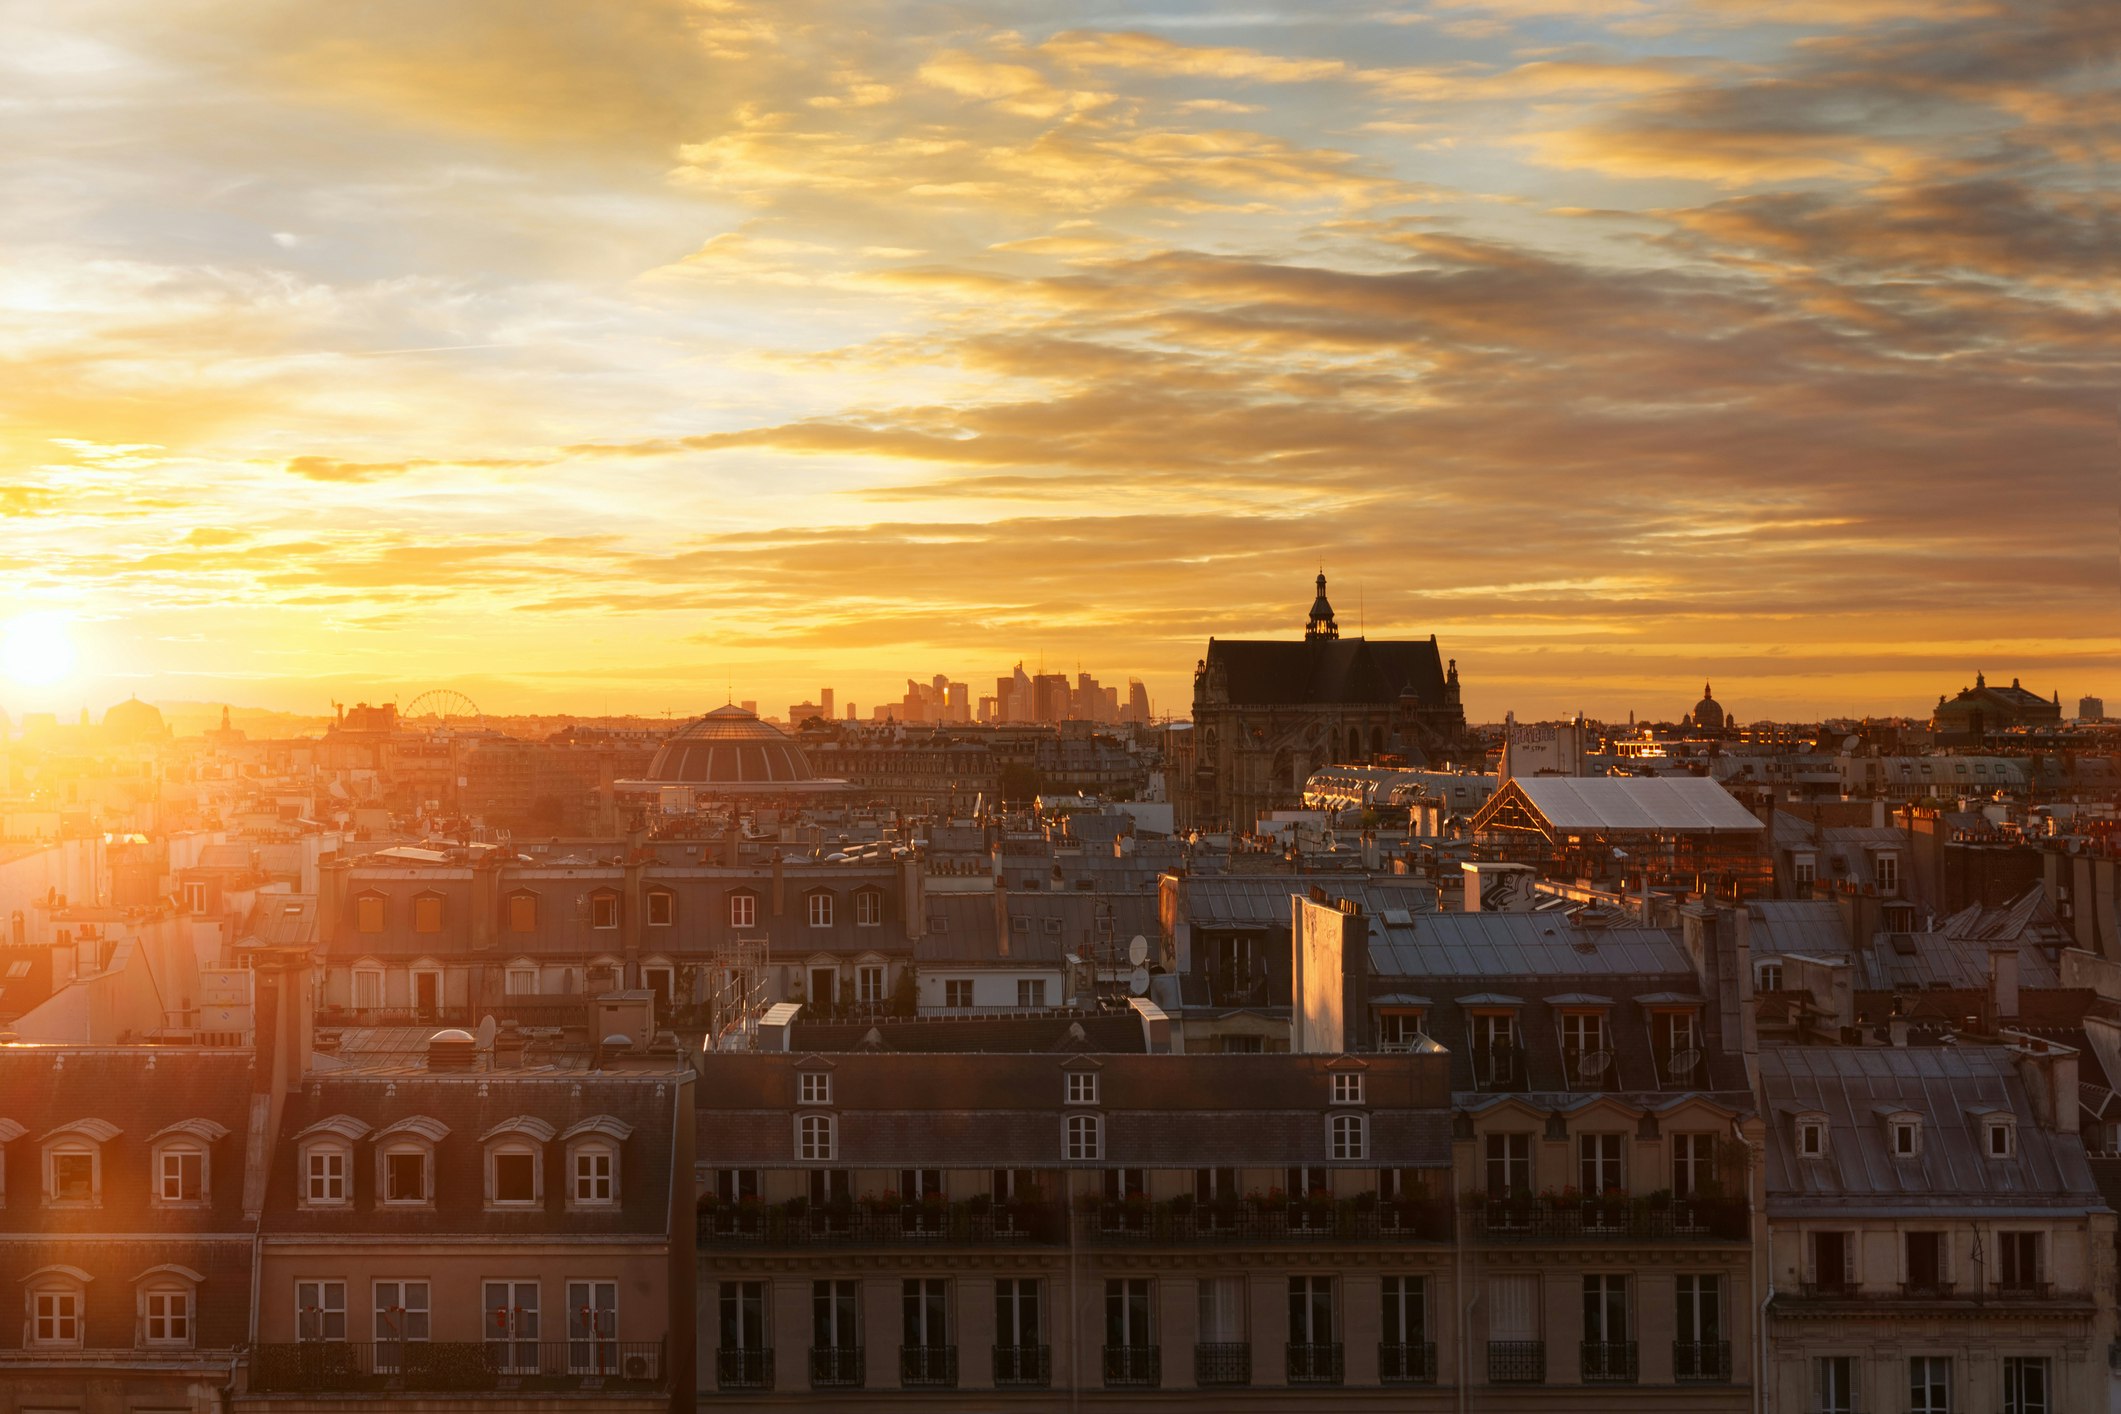 Golden Hour over the rooftop of Paris